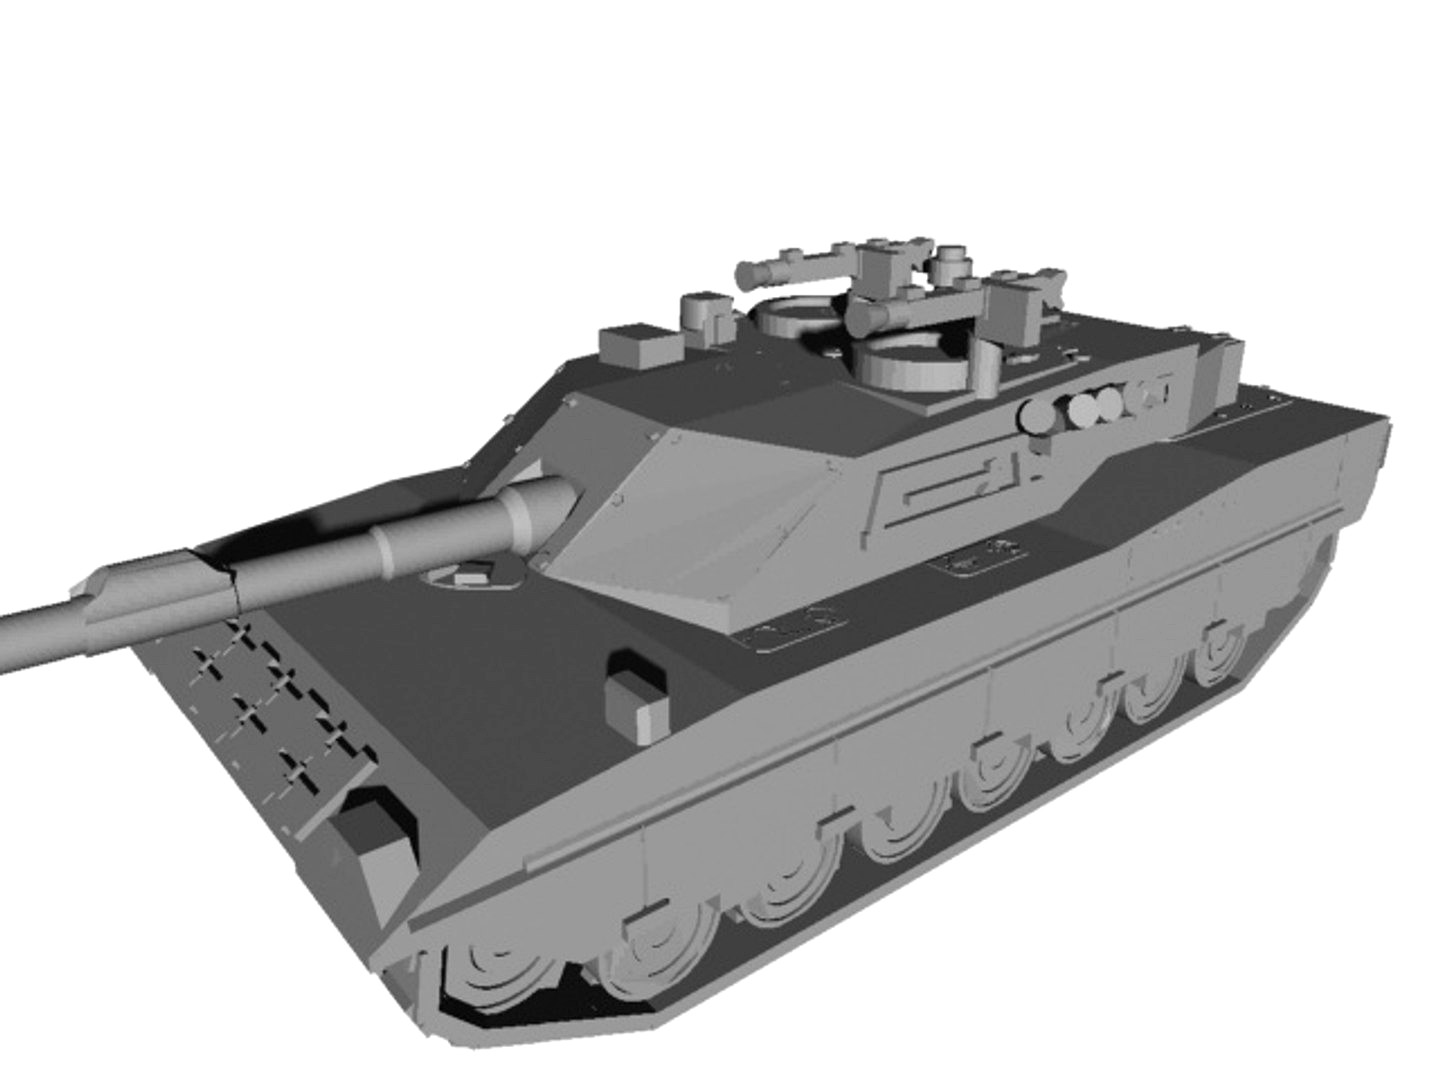 C1 Ariete tank